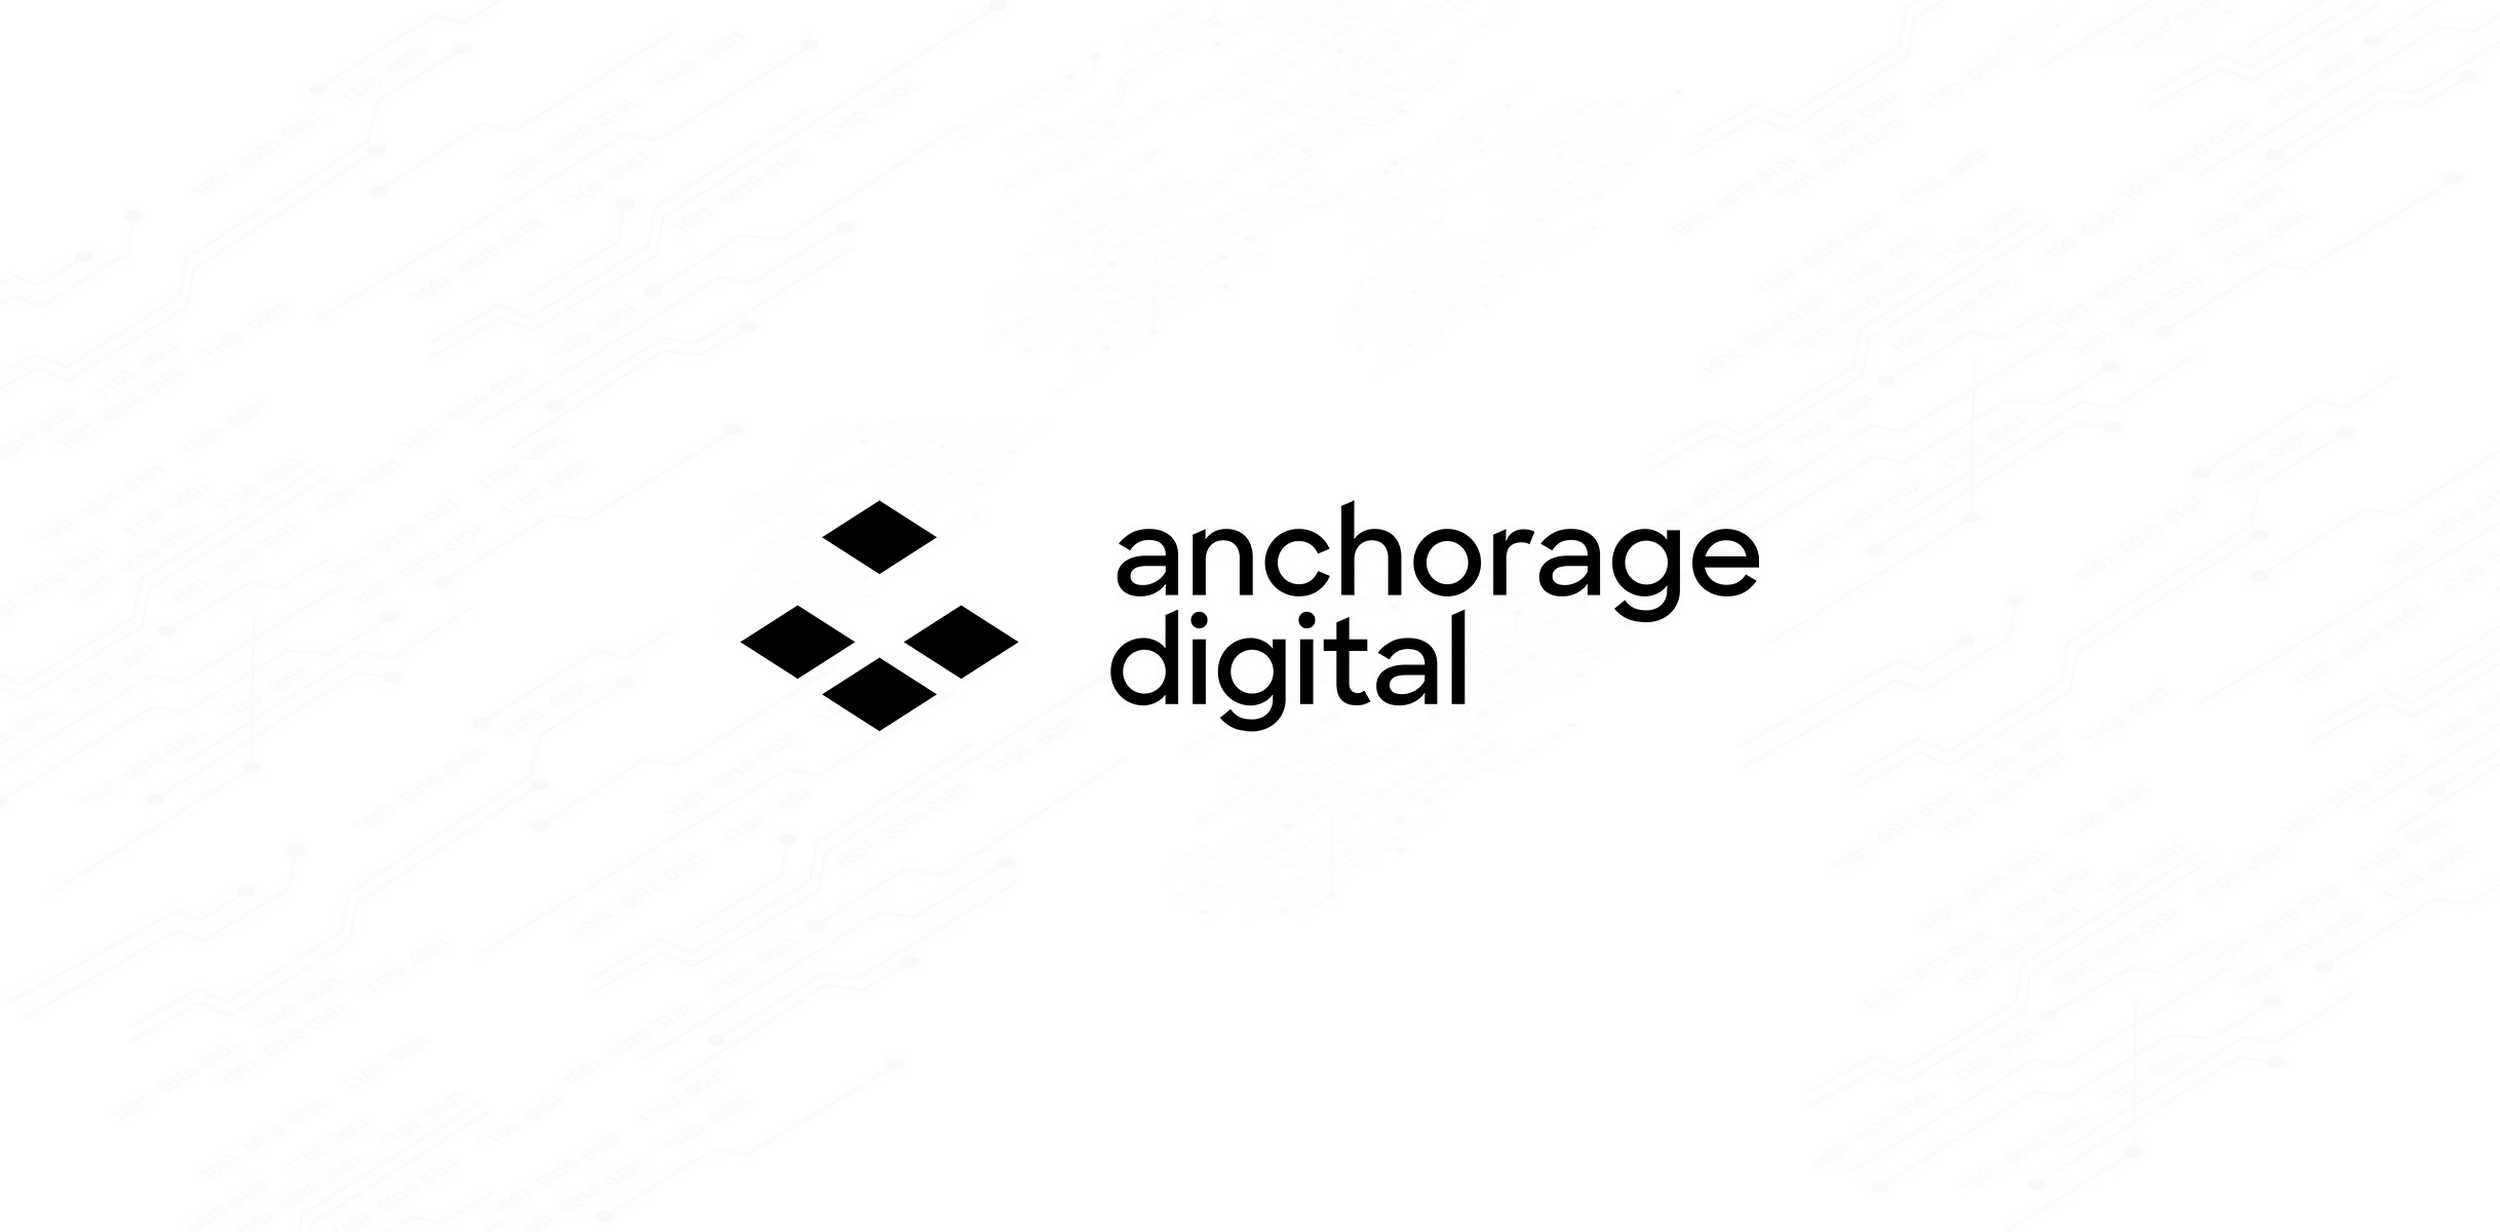 https://storage.googleapis.com/gweb-cloudblog-publish/images/google_cloud_x_anchorage_digital.max-2500x2500.jpg